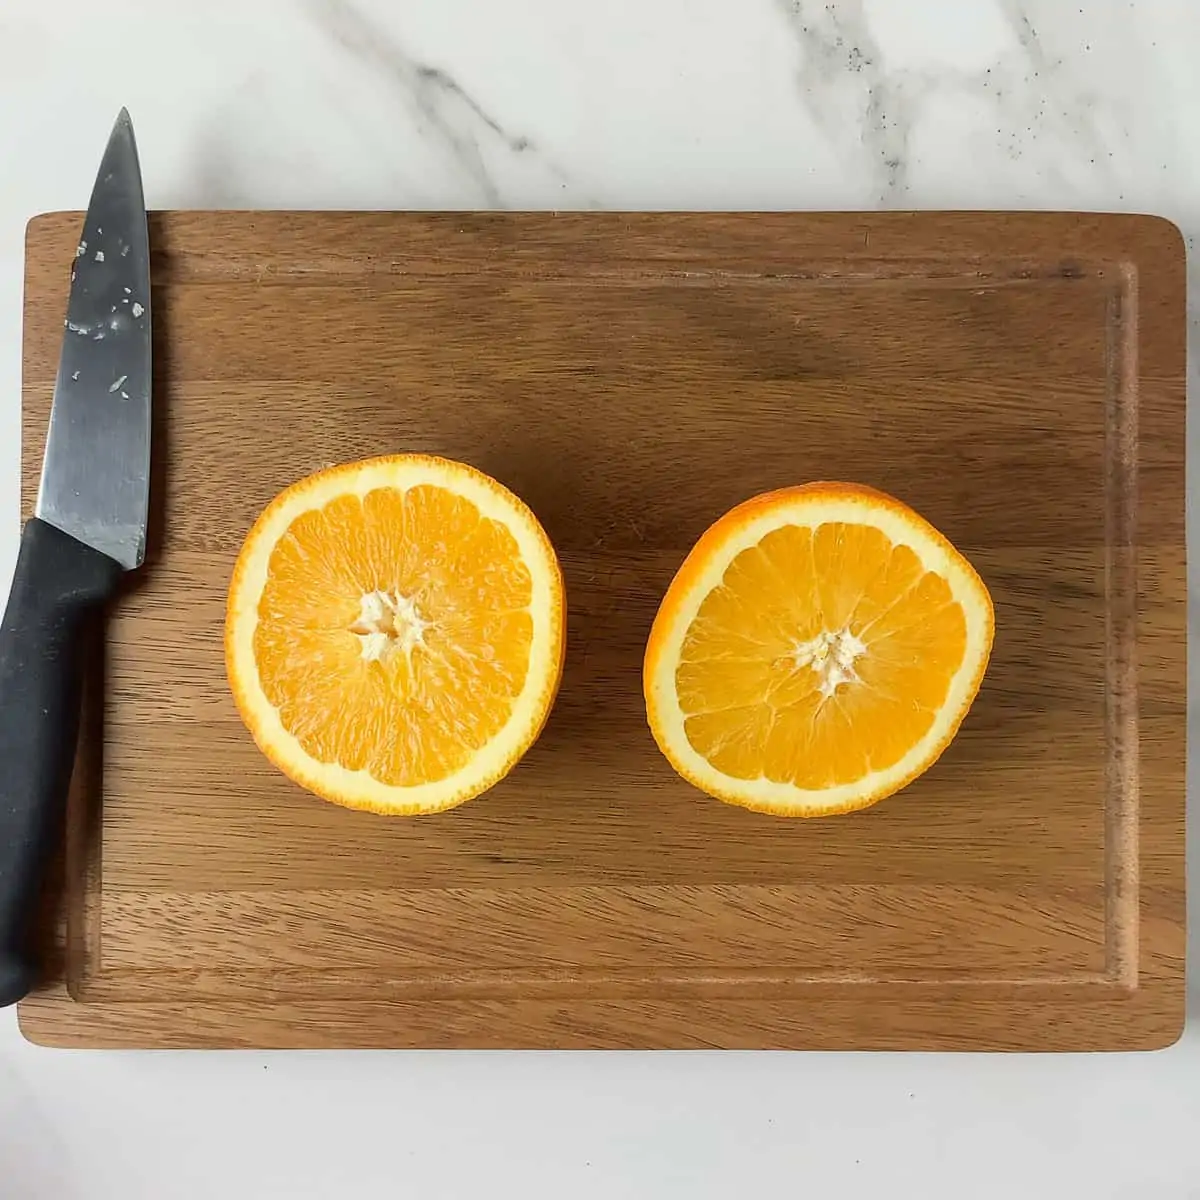 navel oranges sliced in half on wood cutting board